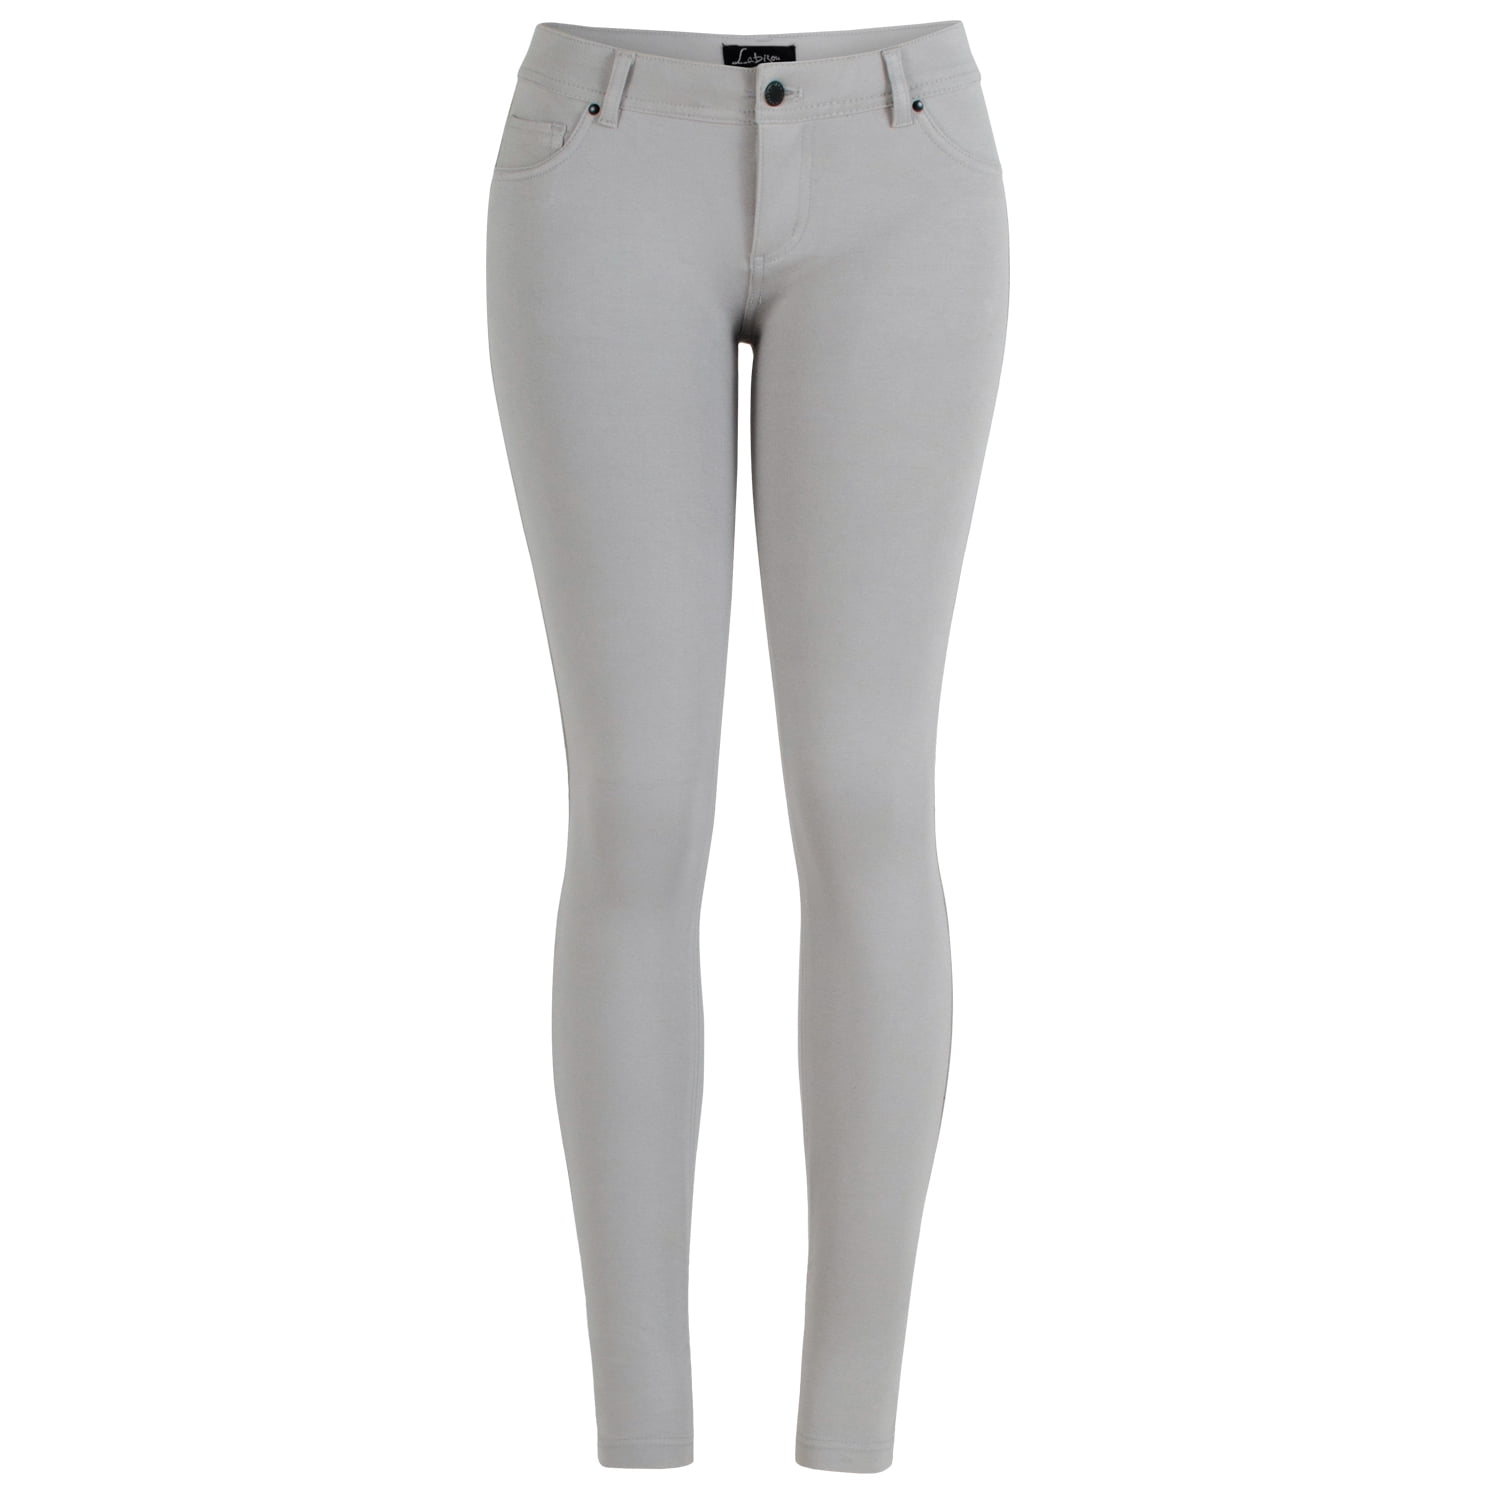 gray skinny pants womens